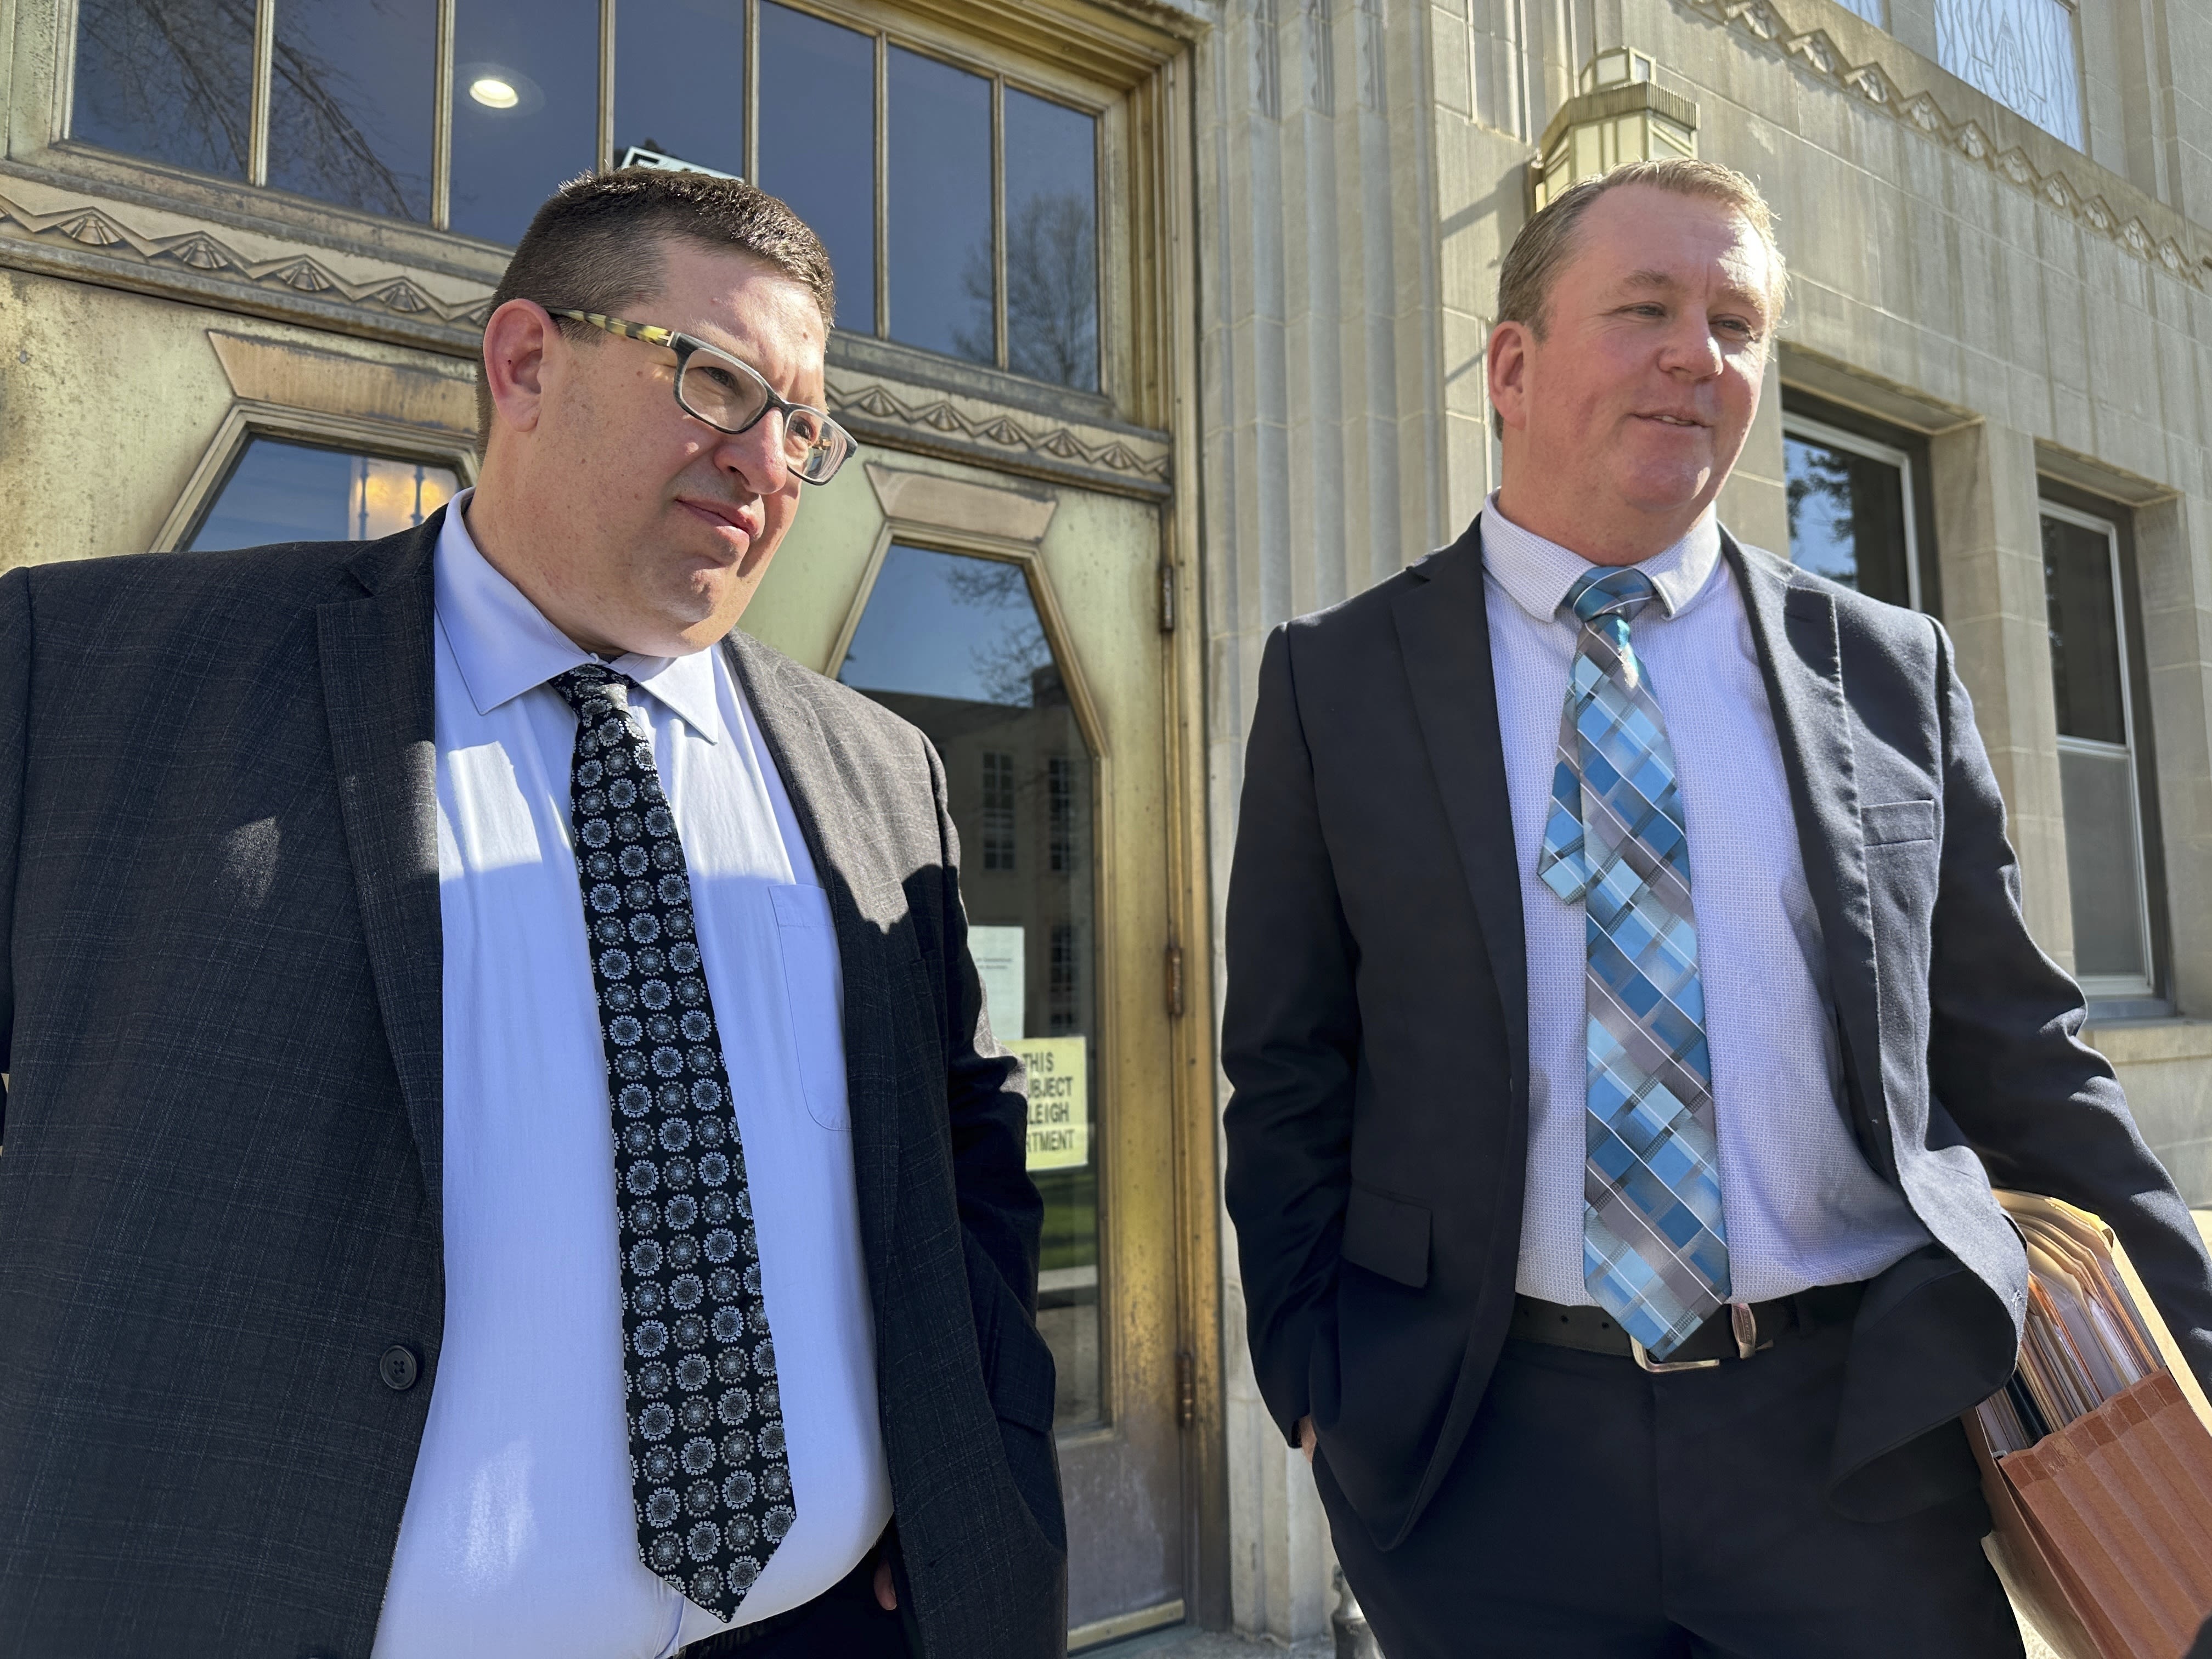 Judge orders community service, fine for North Dakota lawmaker tied to building controversy